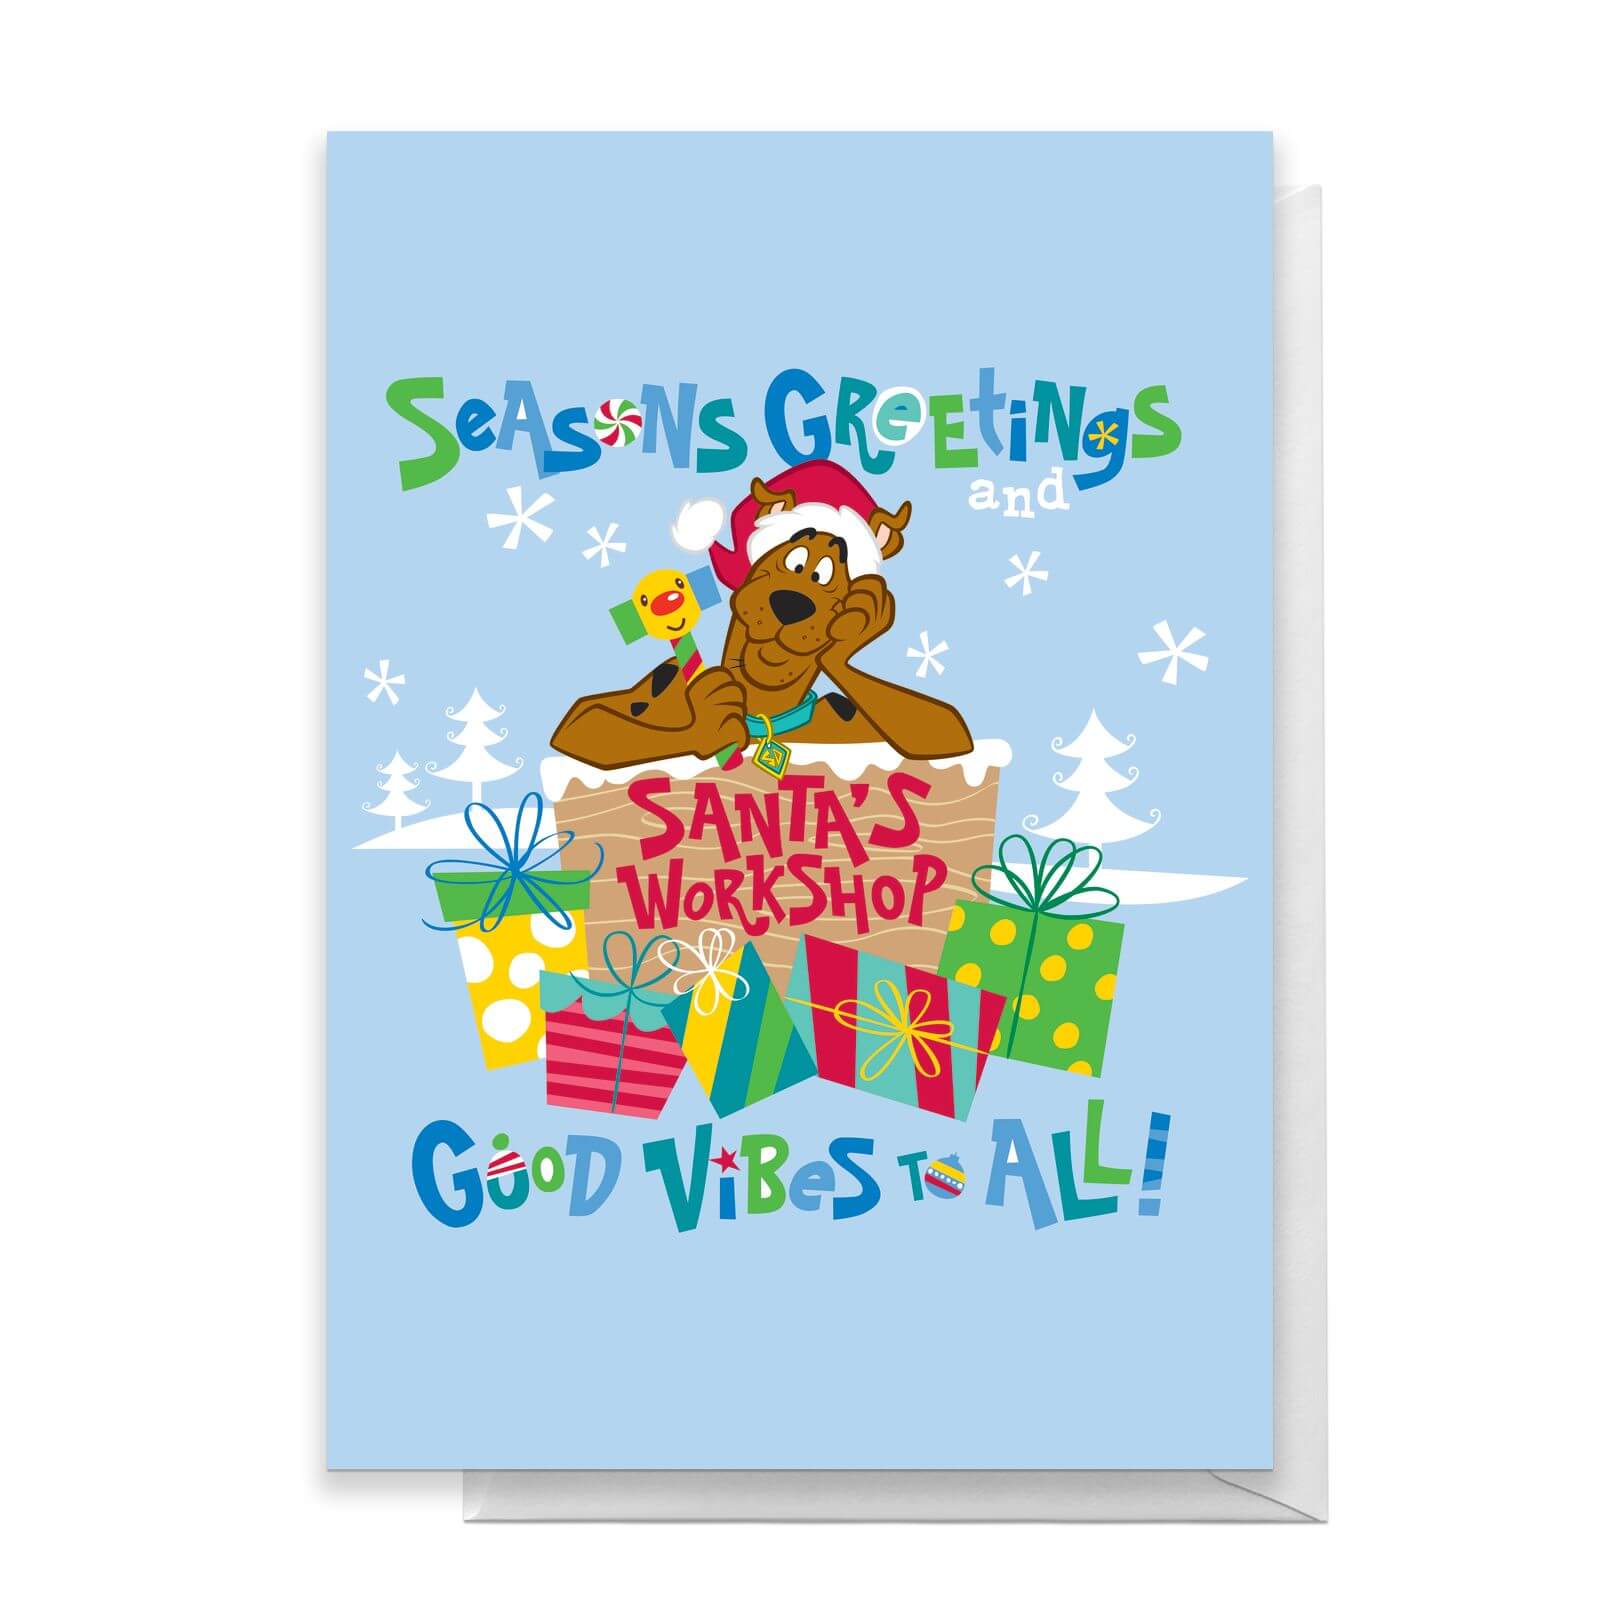 Scooby Doo Seasons Greetings Good Vibes All Greetings Card   Standard Card